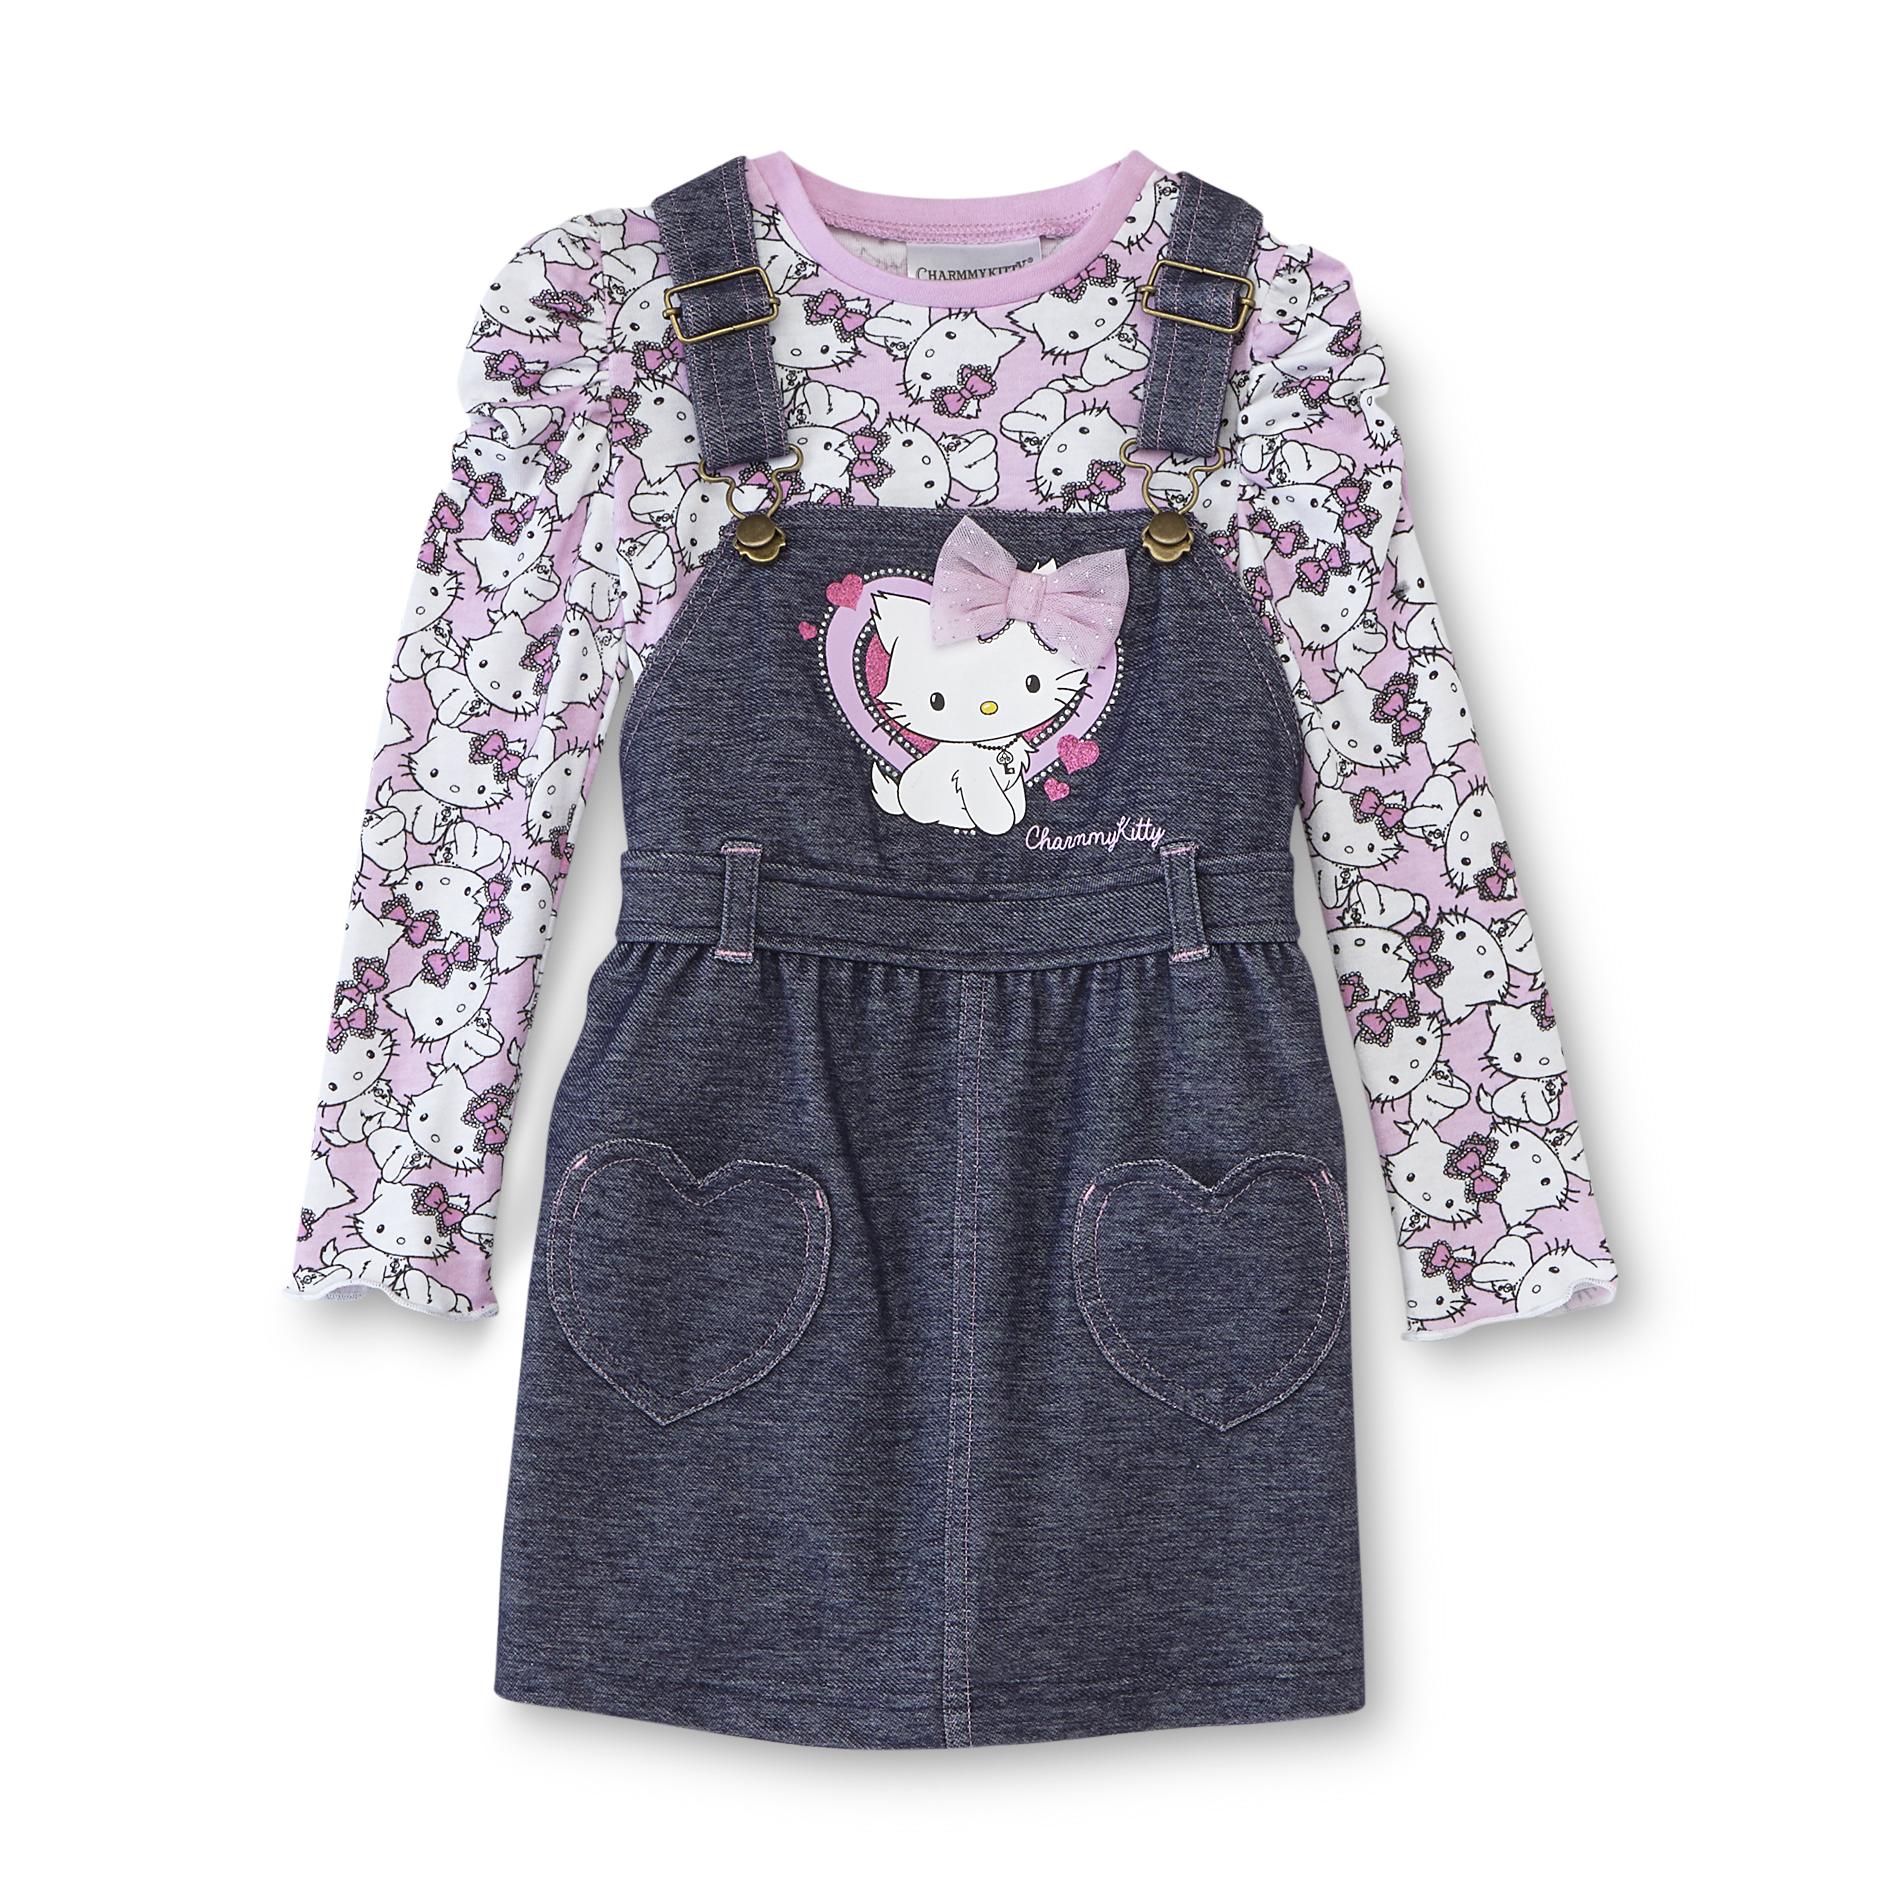 Sanrio Charmmykitty Infant & Toddler Girl's Printed Top & Dress